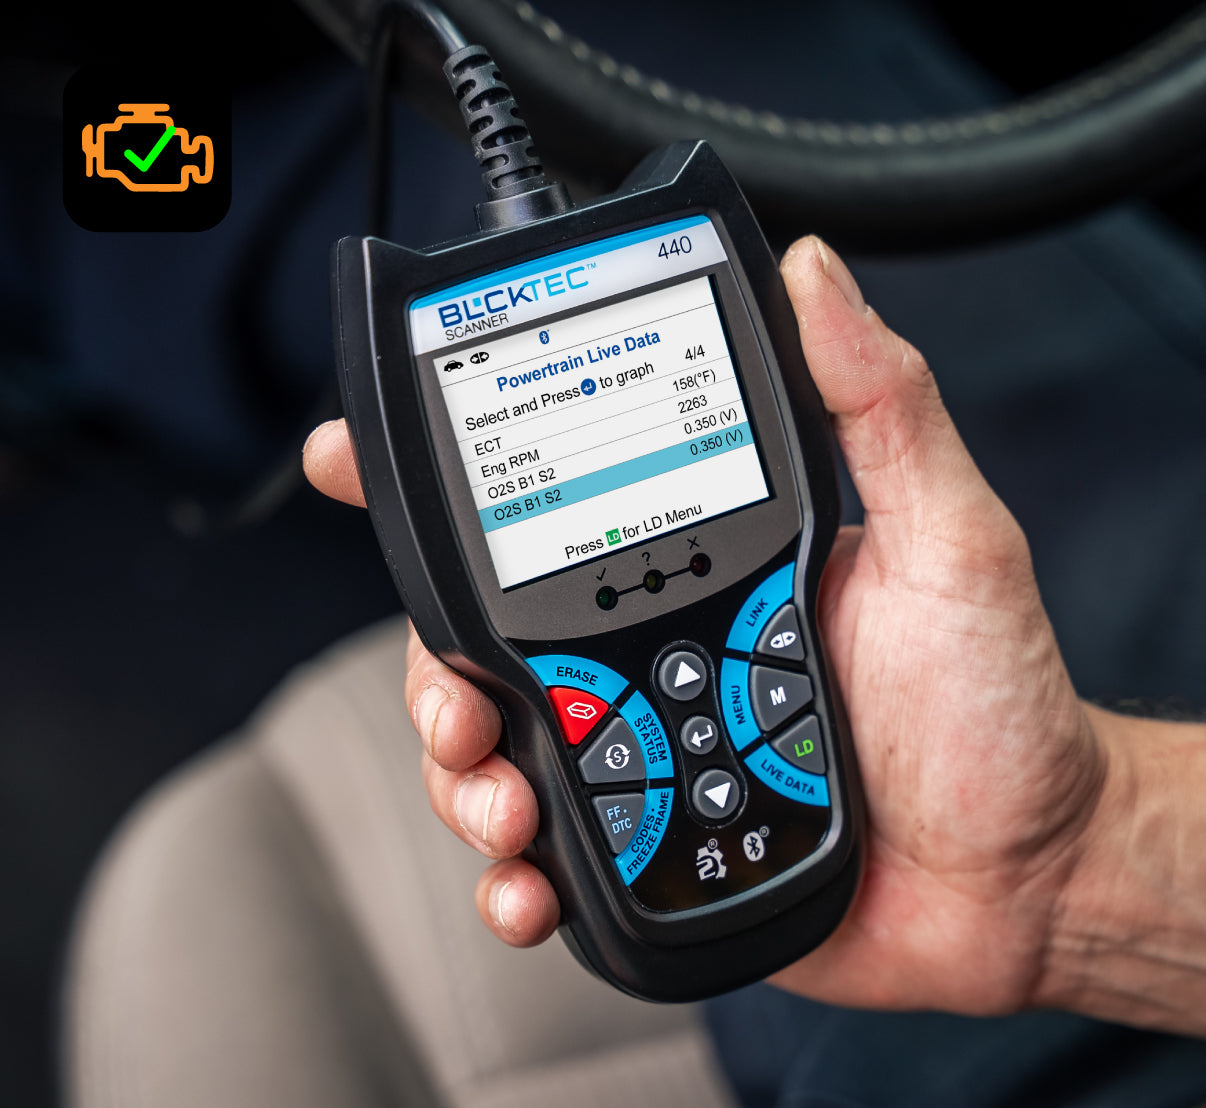 BLCKTEC 410 Bluetooth OBD2 Scanner Diagnostic Tool - Car for All Cars OBDII  Compatible Check Engine Light Code Reader with Reset Comes Premium OBD App